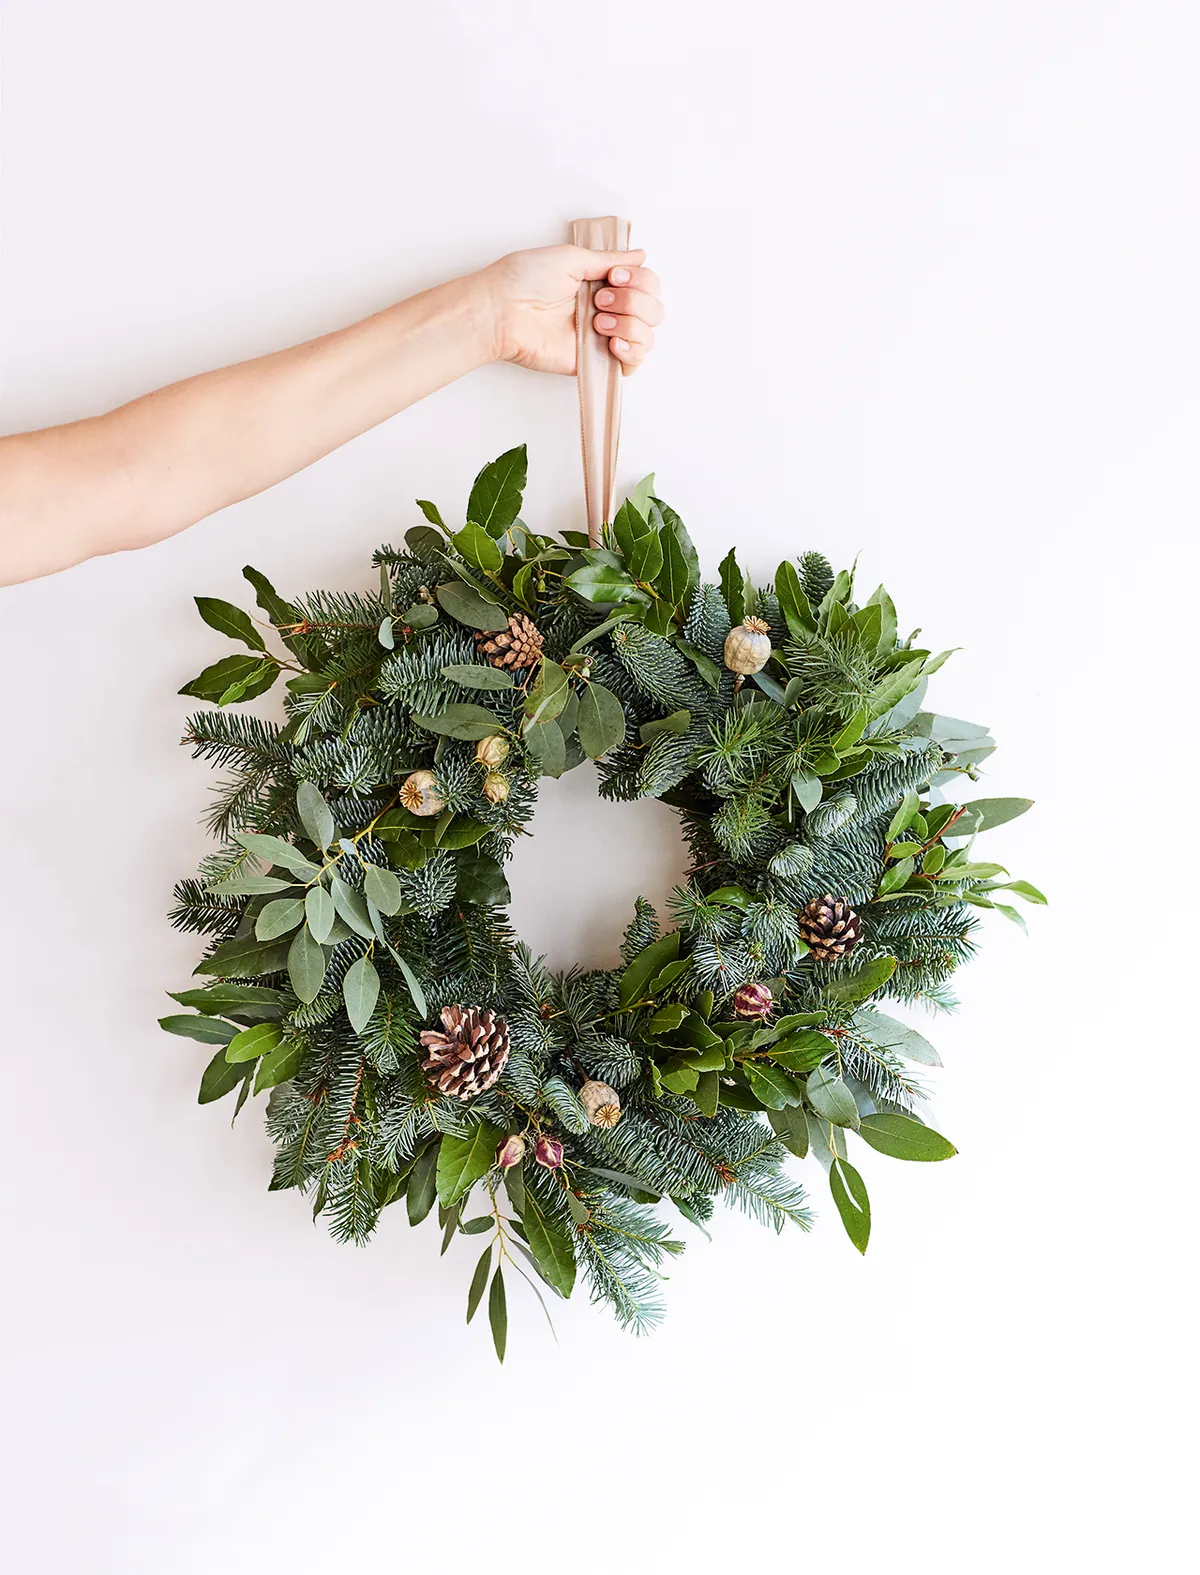 pine cone crafts wreath